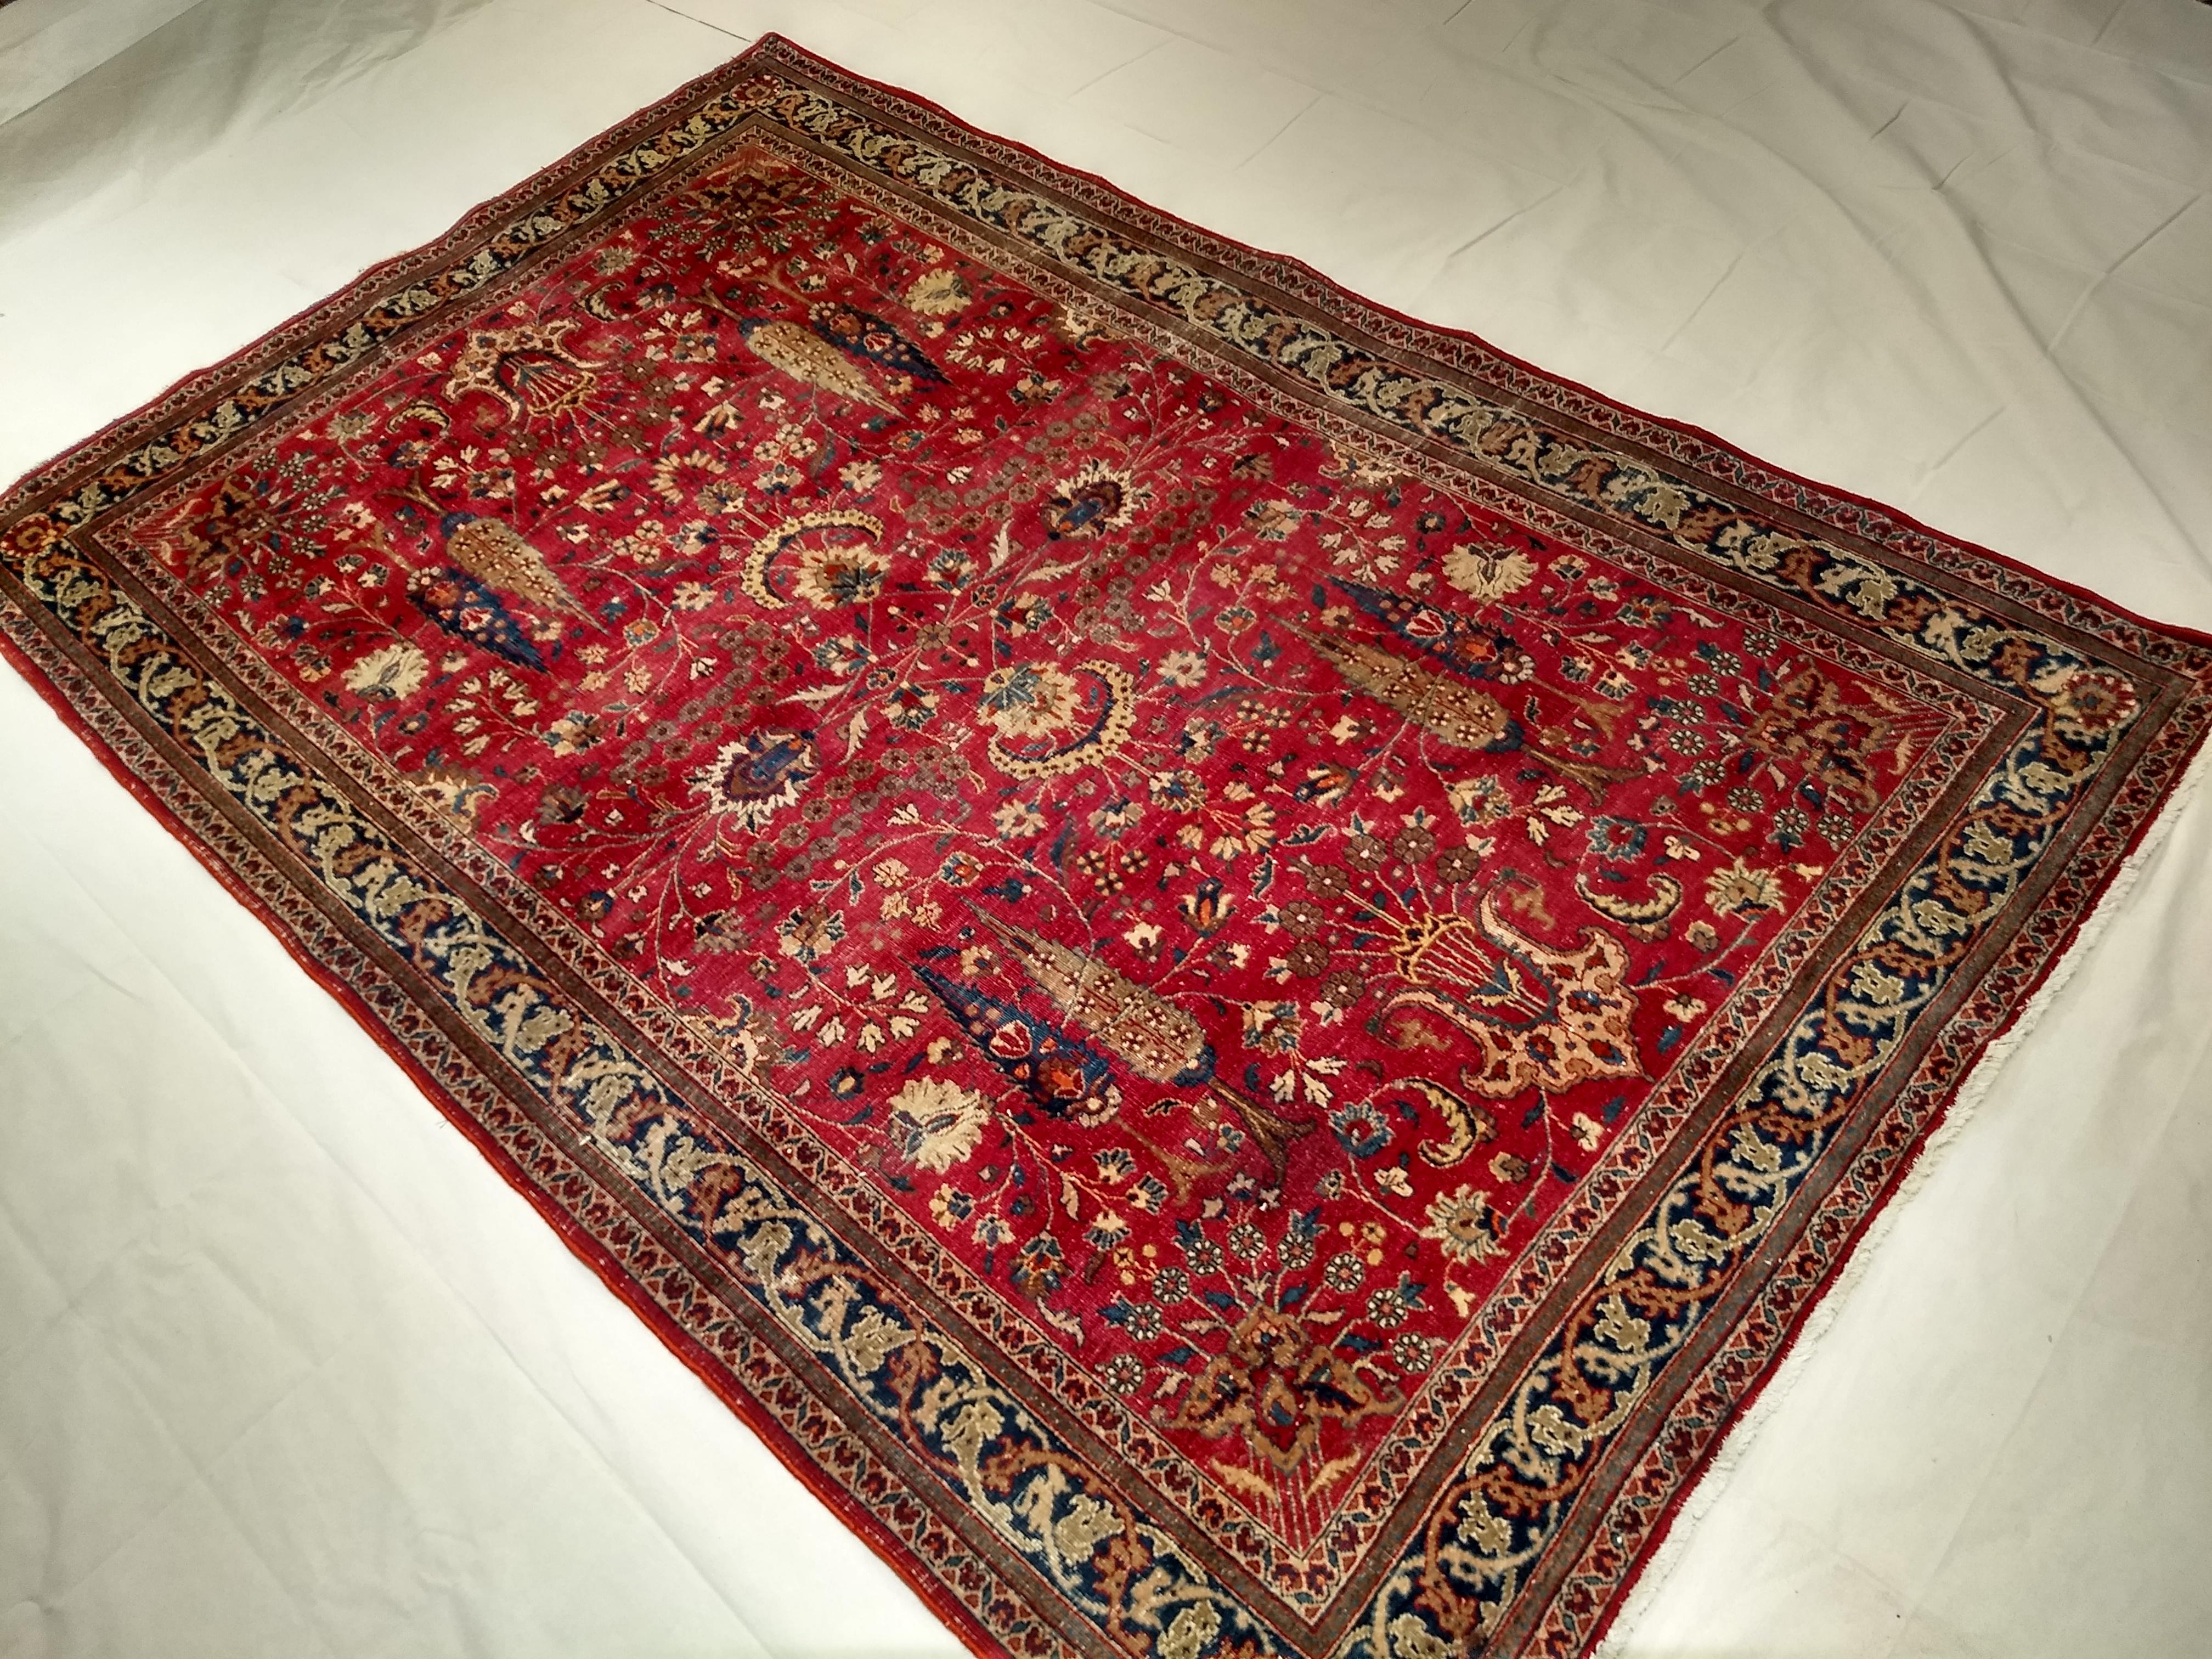 19th Century Persian Khorassan in Allover Floral Design in Crimson Red, Blue For Sale 5